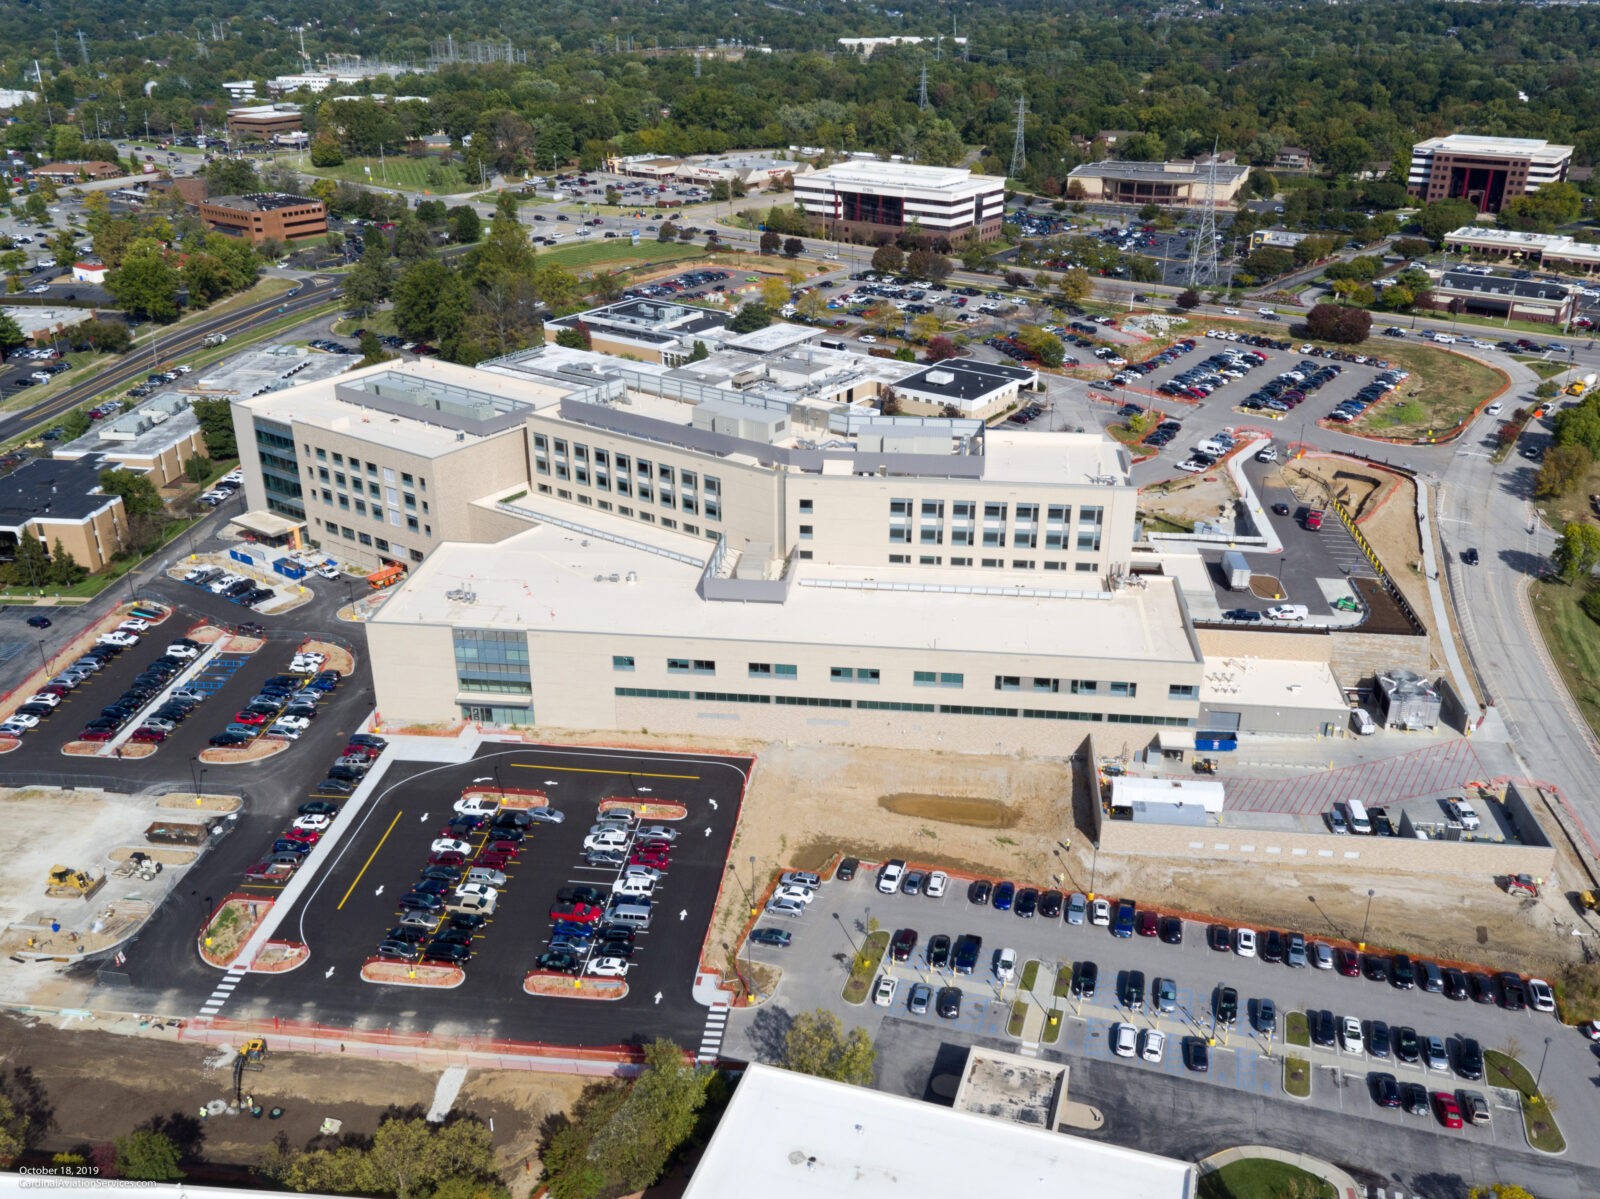 Barnes-Jewish West County Hospital aerial shot back view